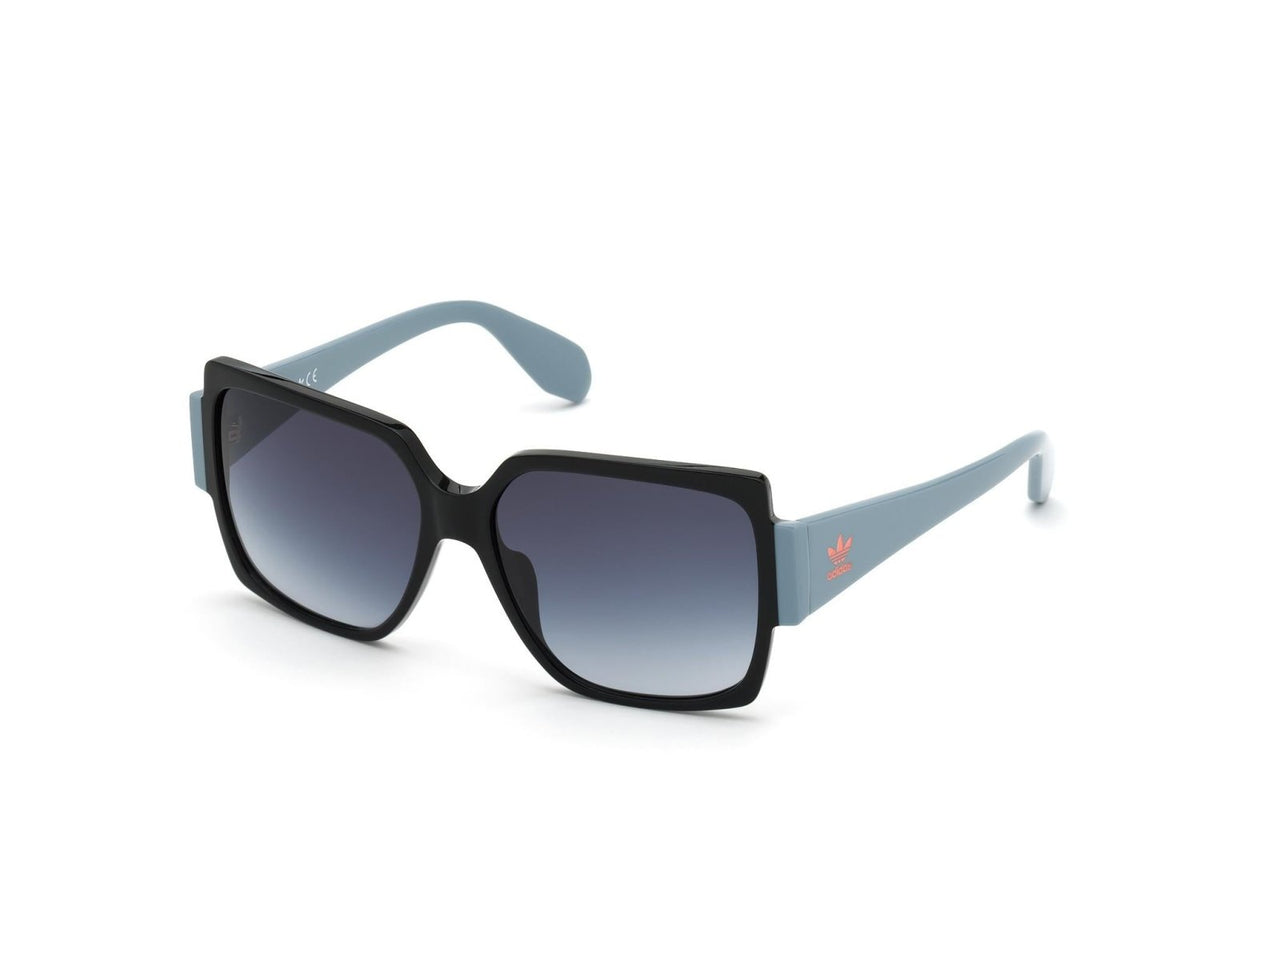 ADIDAS ORIGINALS 0005 Sunglasses